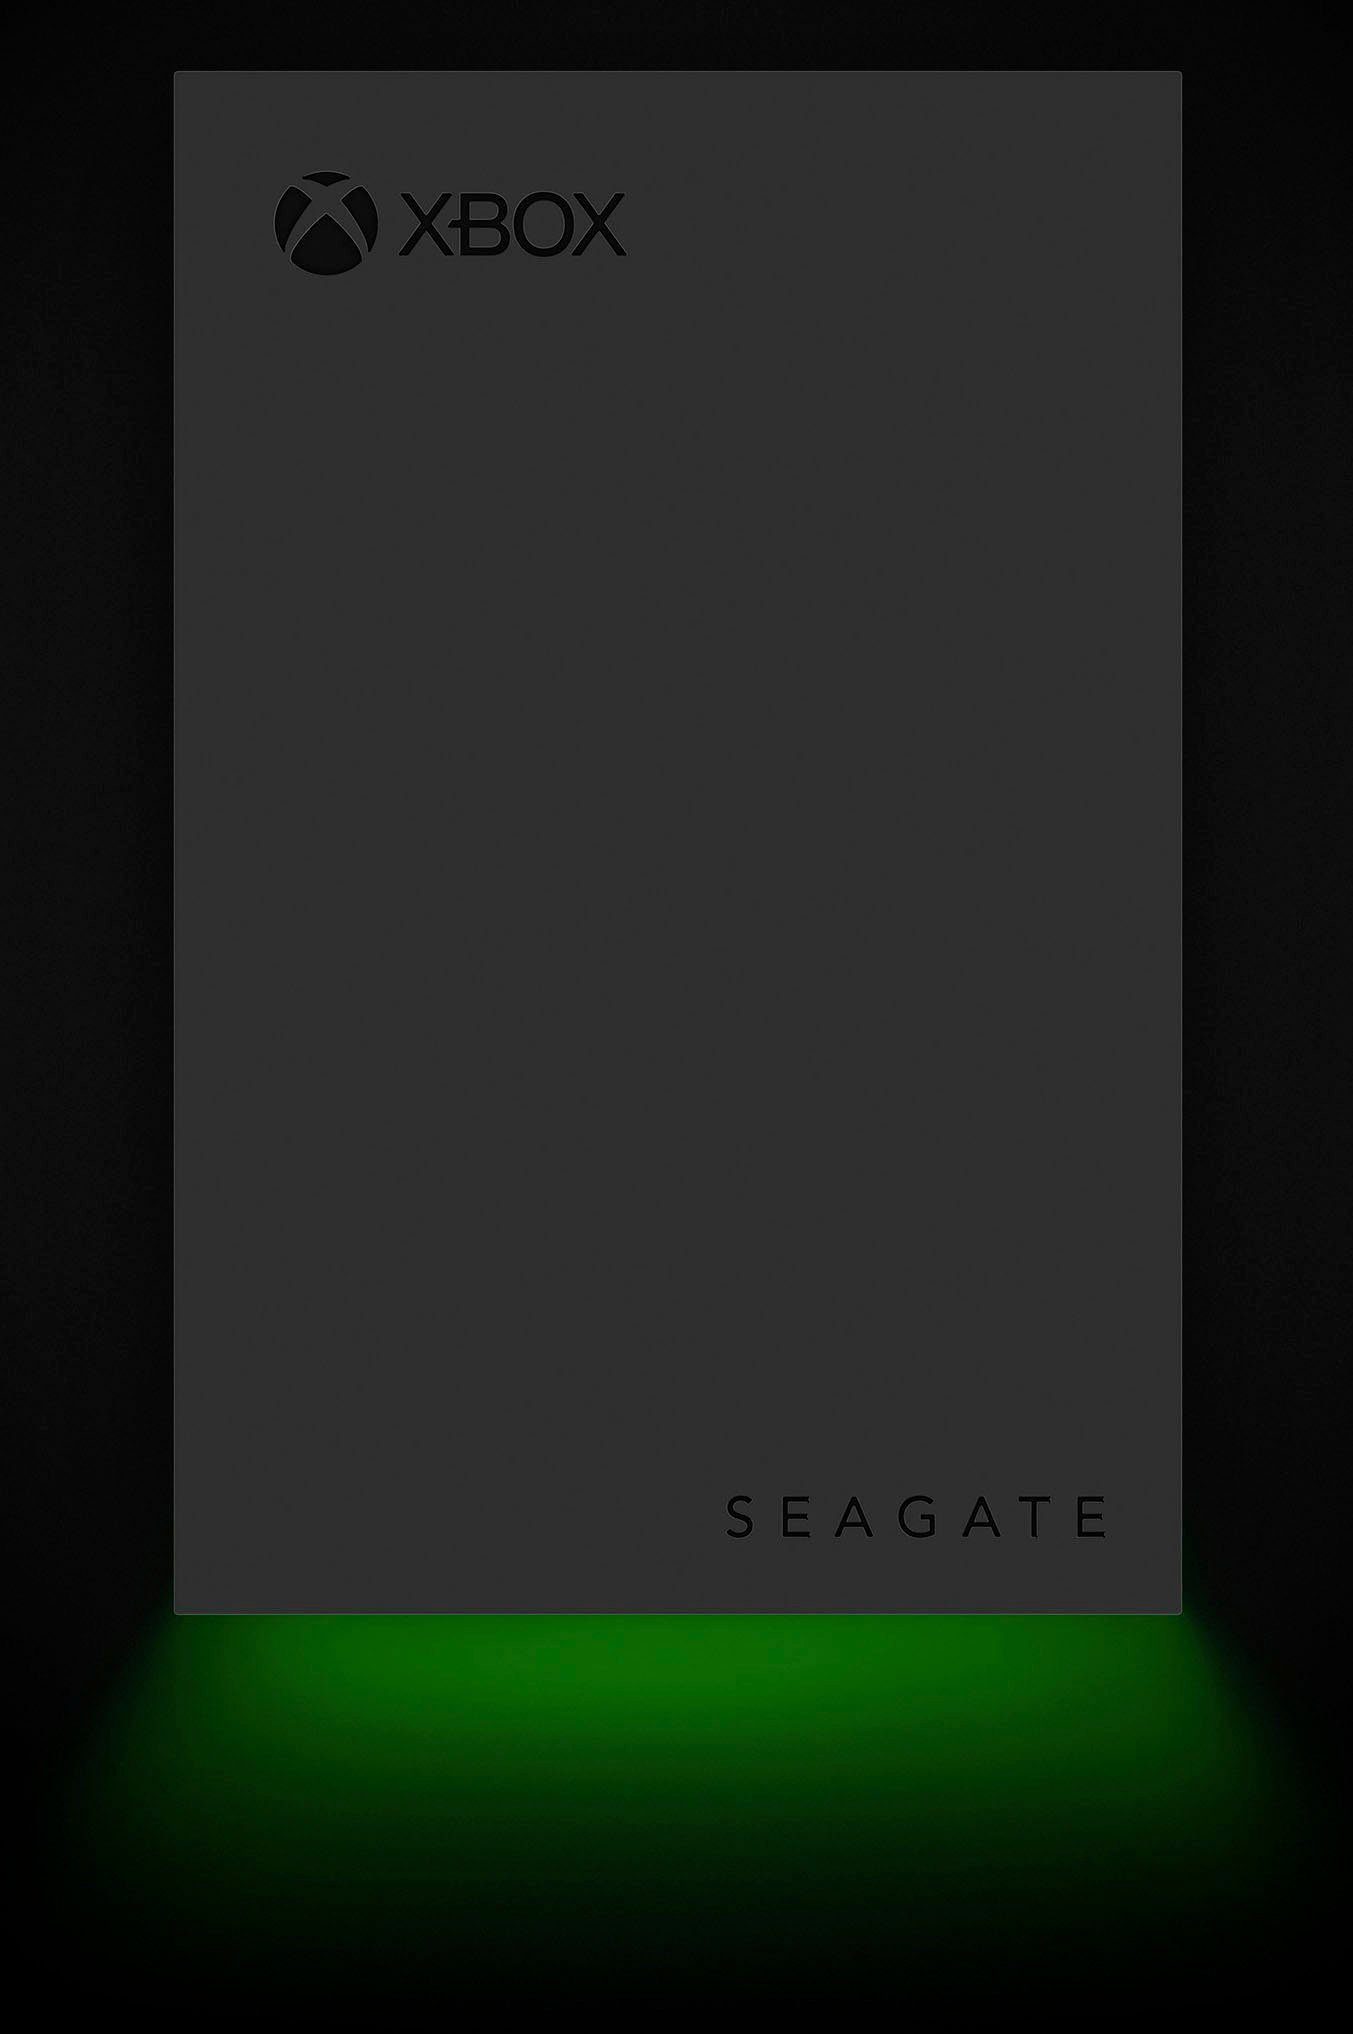 externe Drive (4 Game Xbox 4TB TB) Gaming-Festplatte Seagate